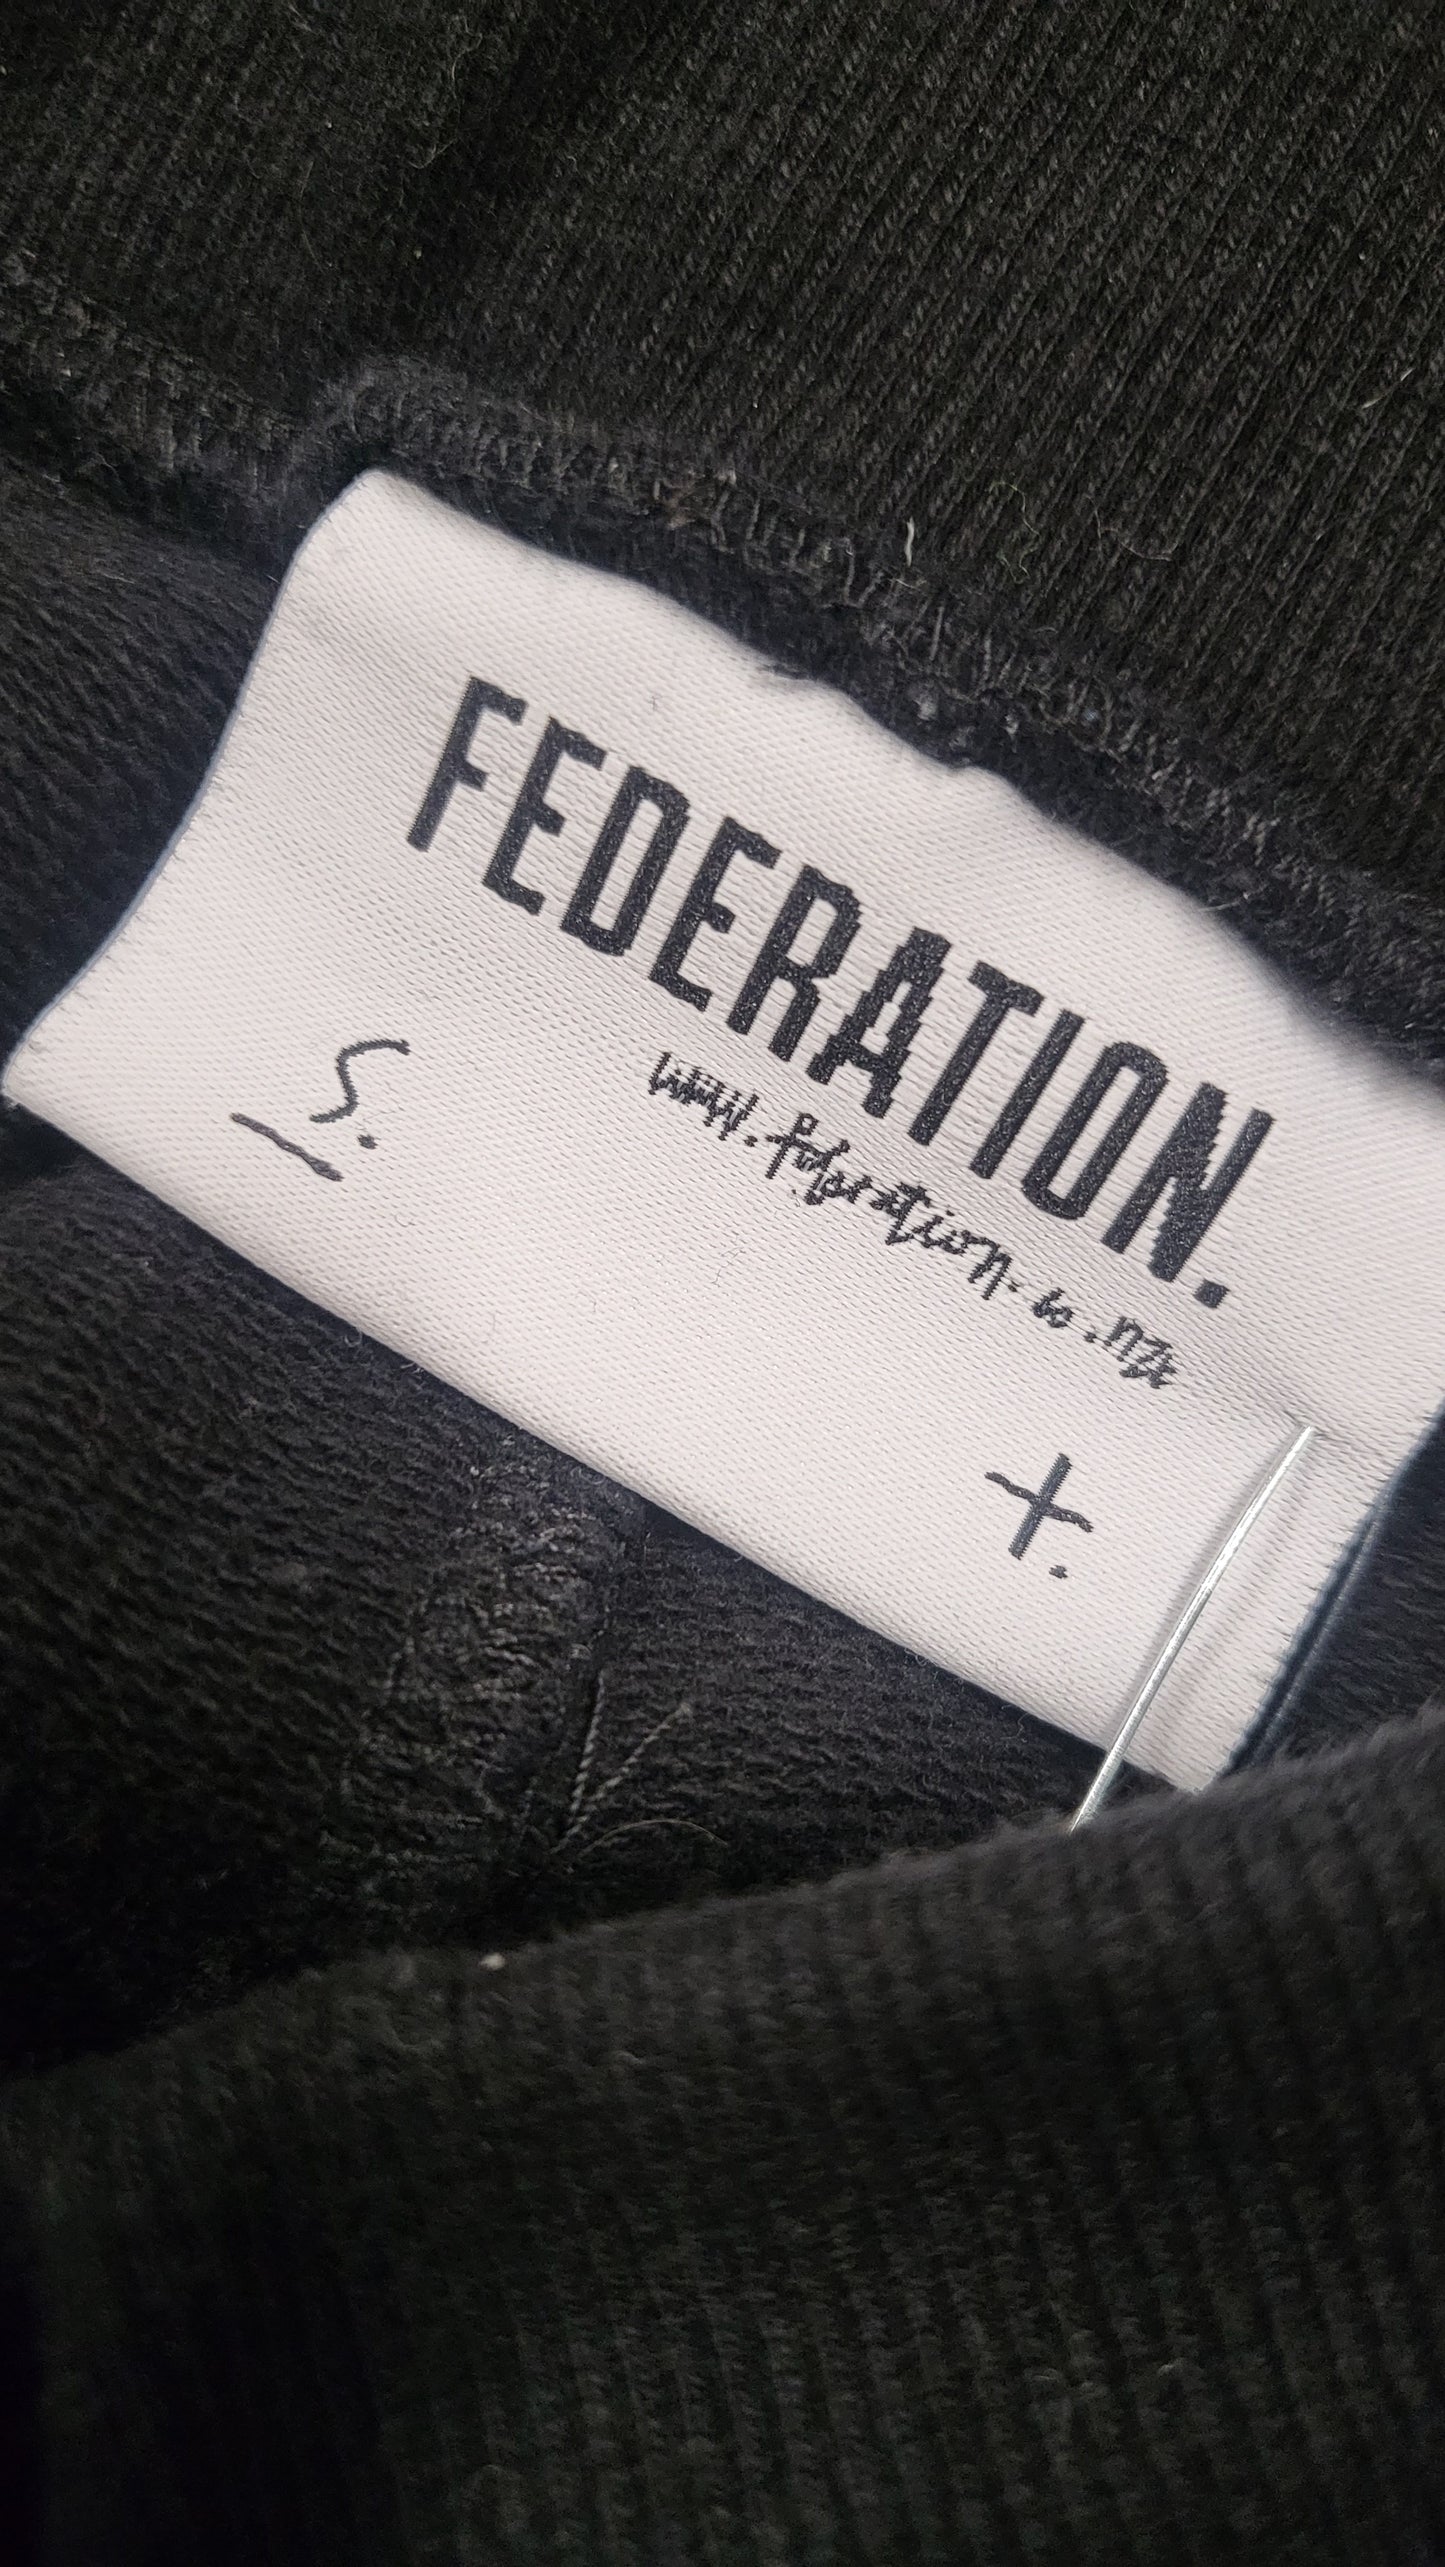 Federation Black Lace Detail Sweat Pants (10)